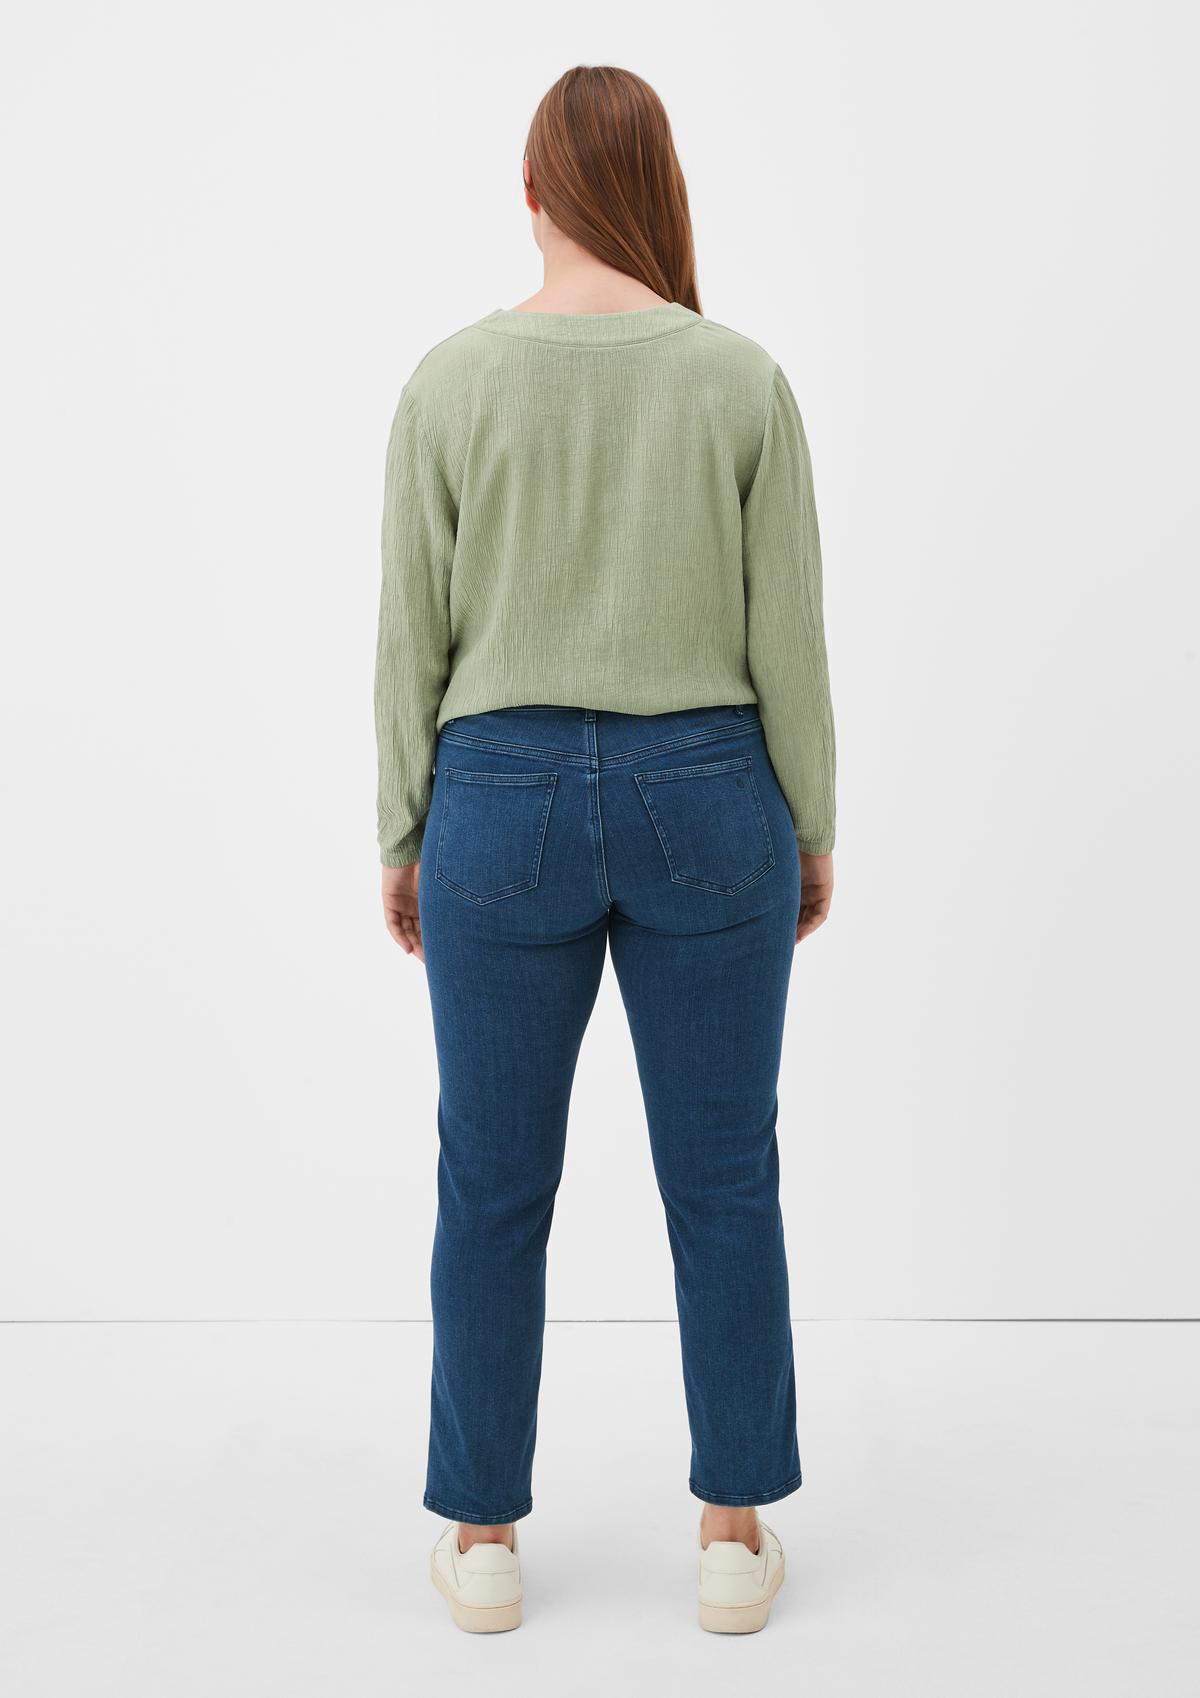 s.Oliver Slim fit: jeans with a vintage garment wash